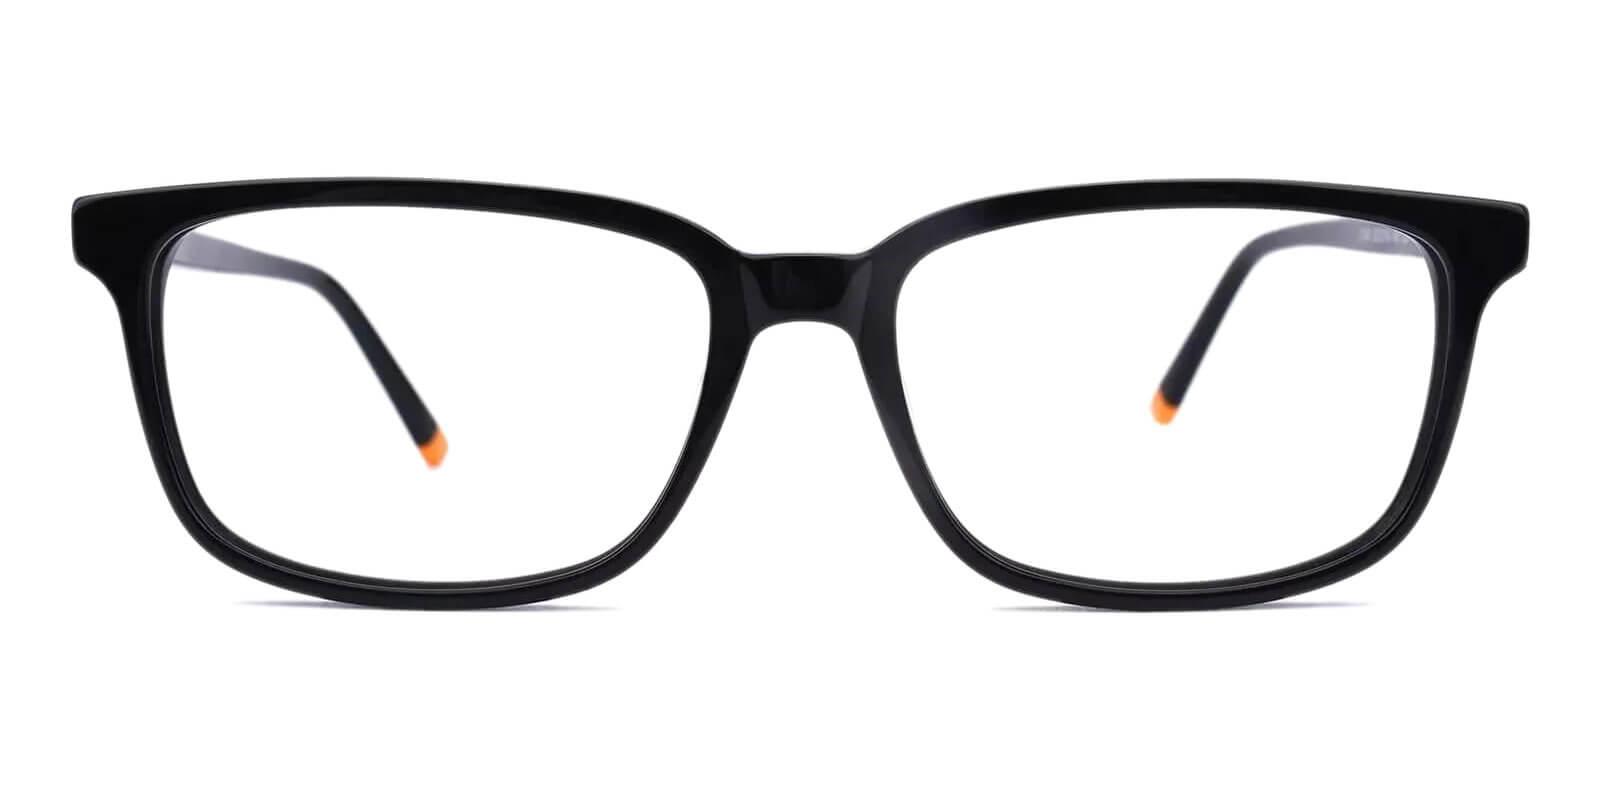 Leupp Corner Black Acetate Eyeglasses , UniversalBridgeFit , SpringHinges Frames from ABBE Glasses